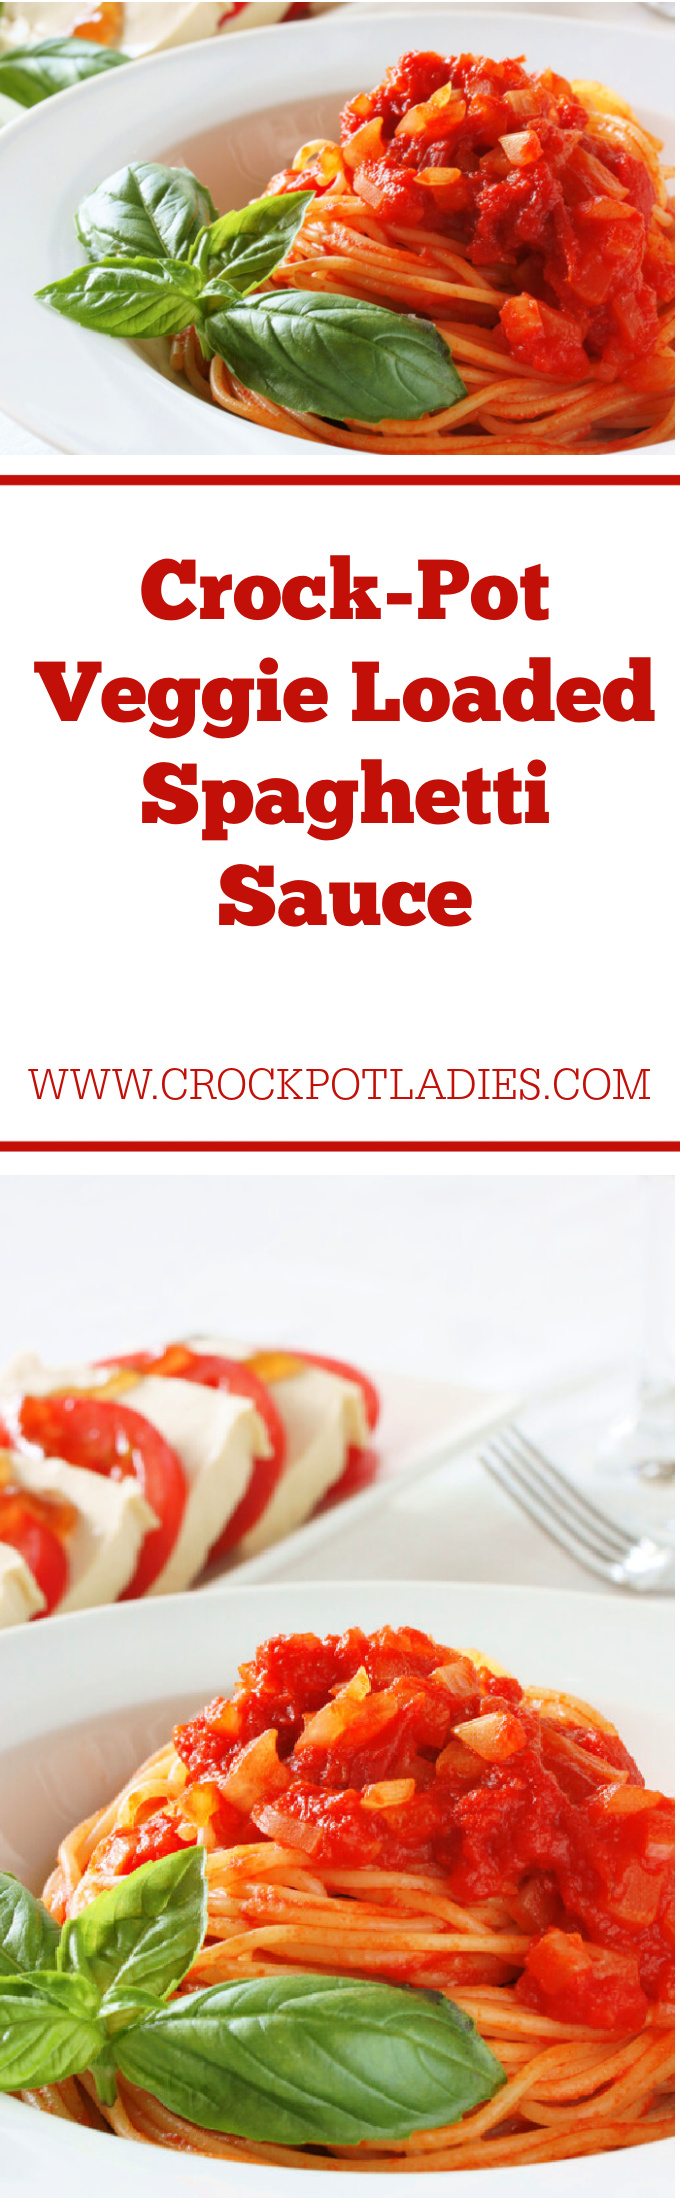 Crock-Pot Veggie Loaded Spaghetti Sauce